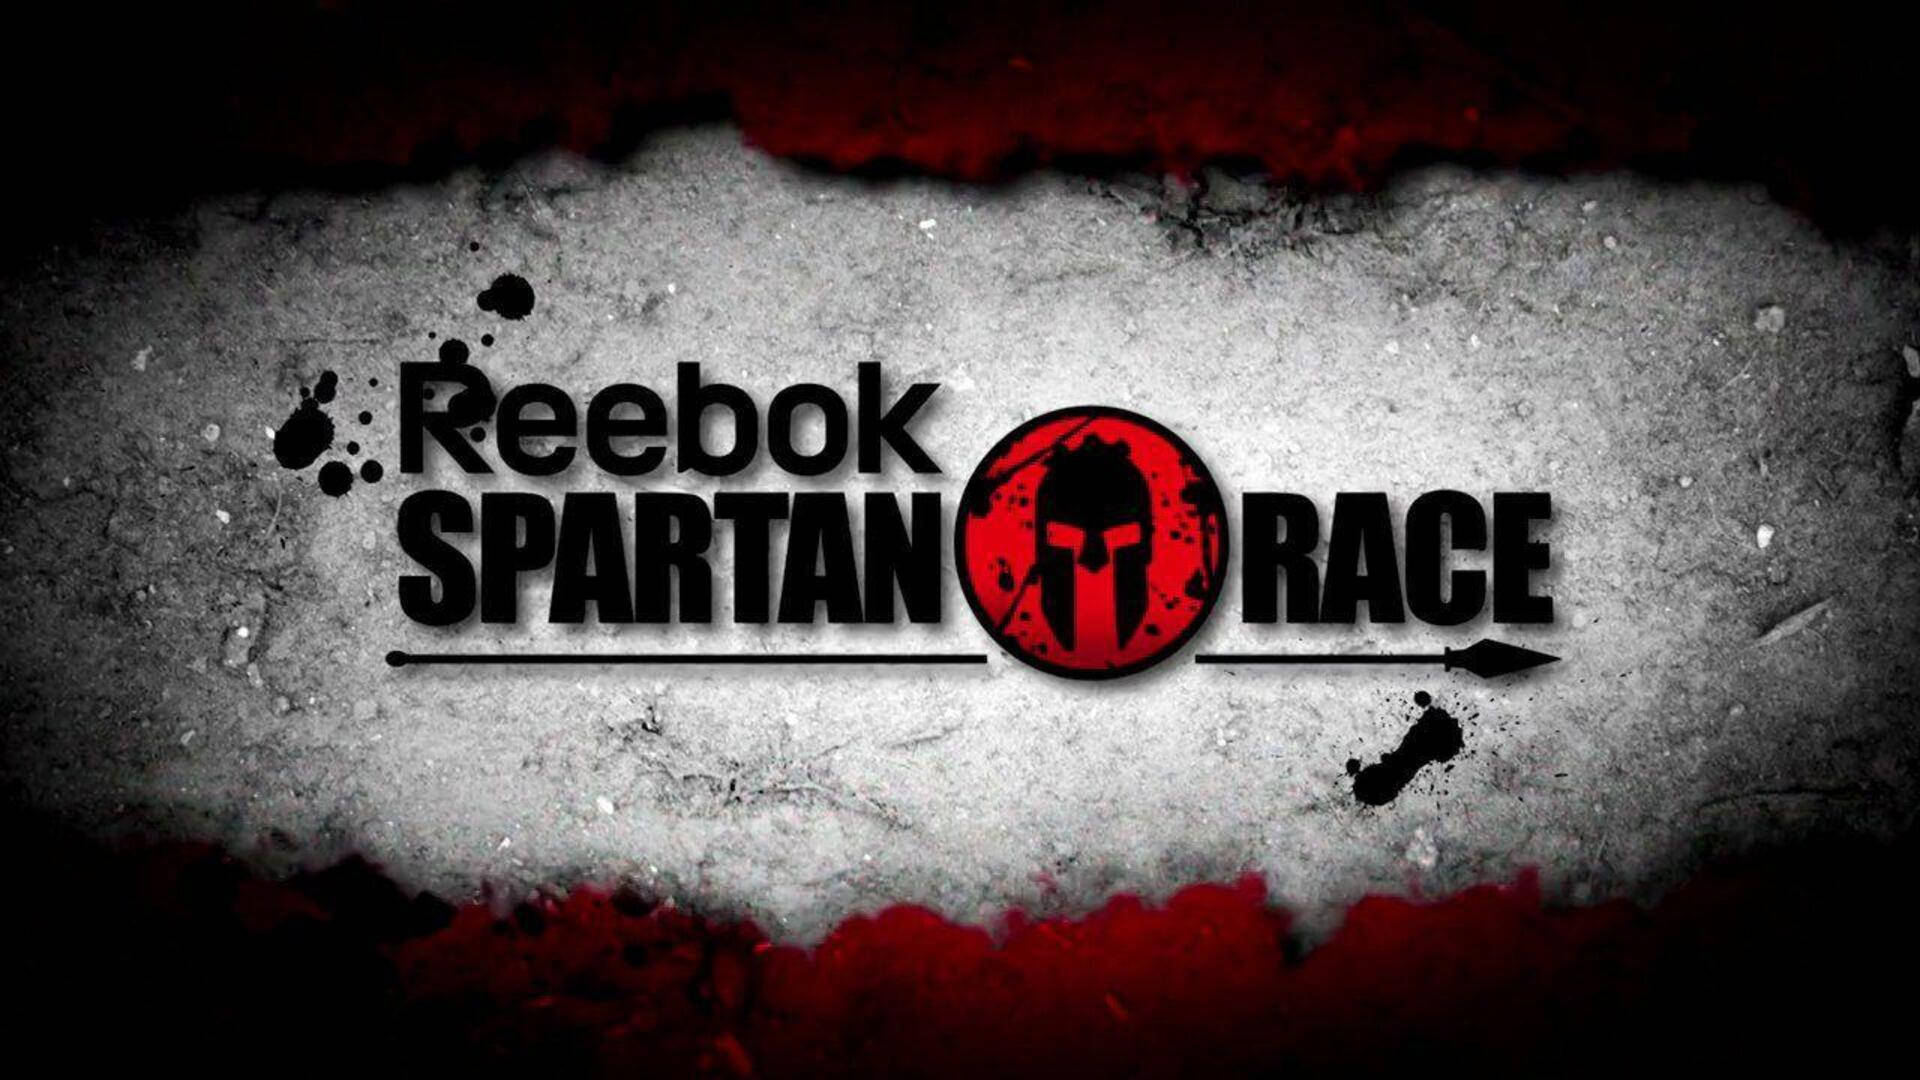 Spartan Race Wallpapers